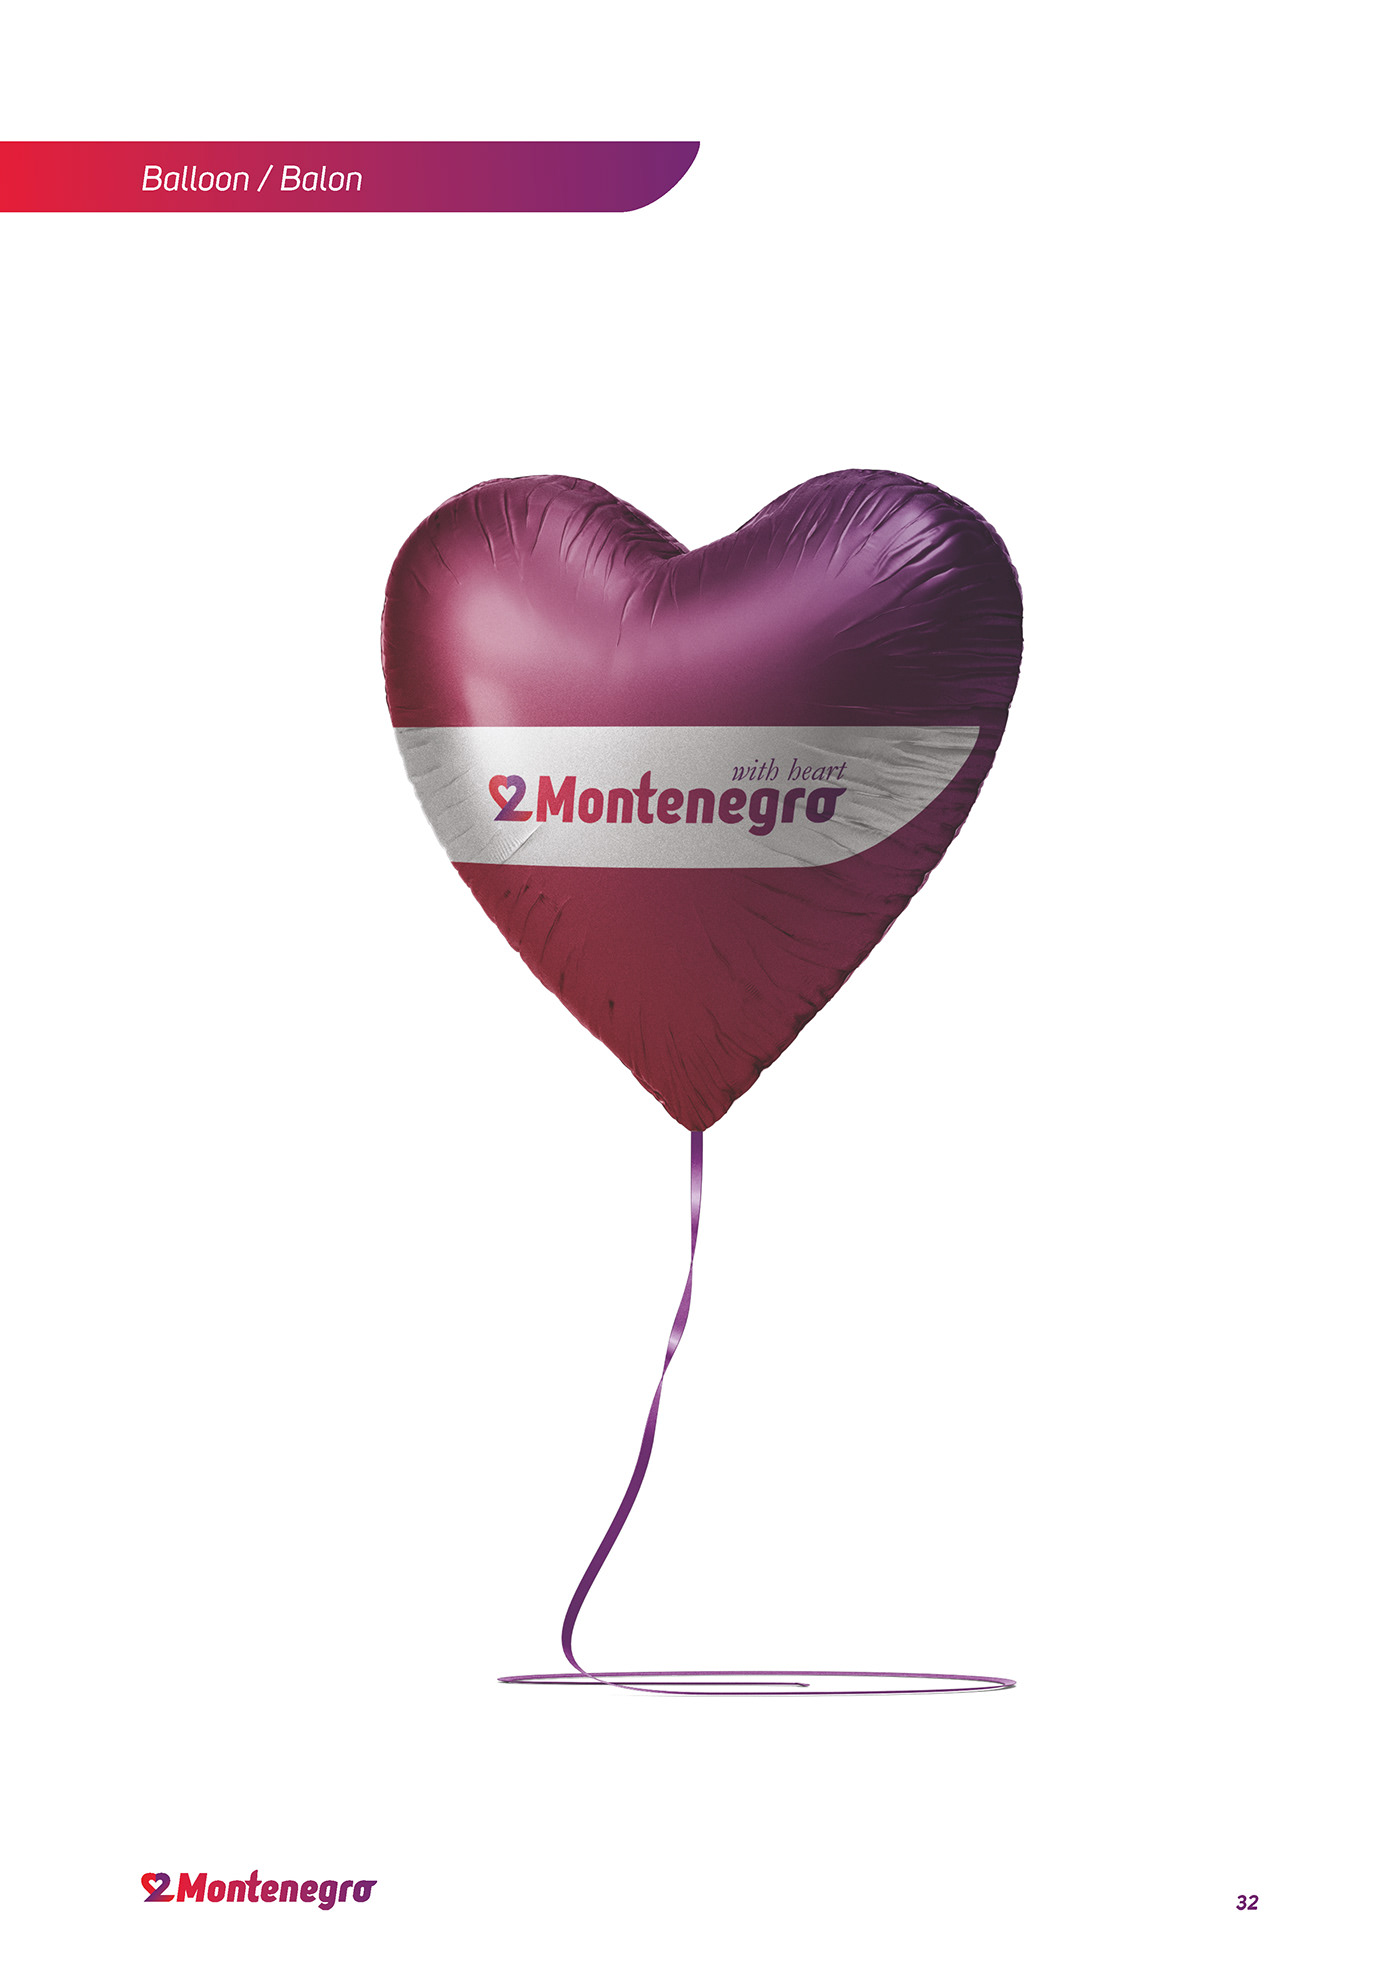 2montenegro airline Airlines airmontenegro airplane heart montenegro Montenegro Airlines SKY with heart